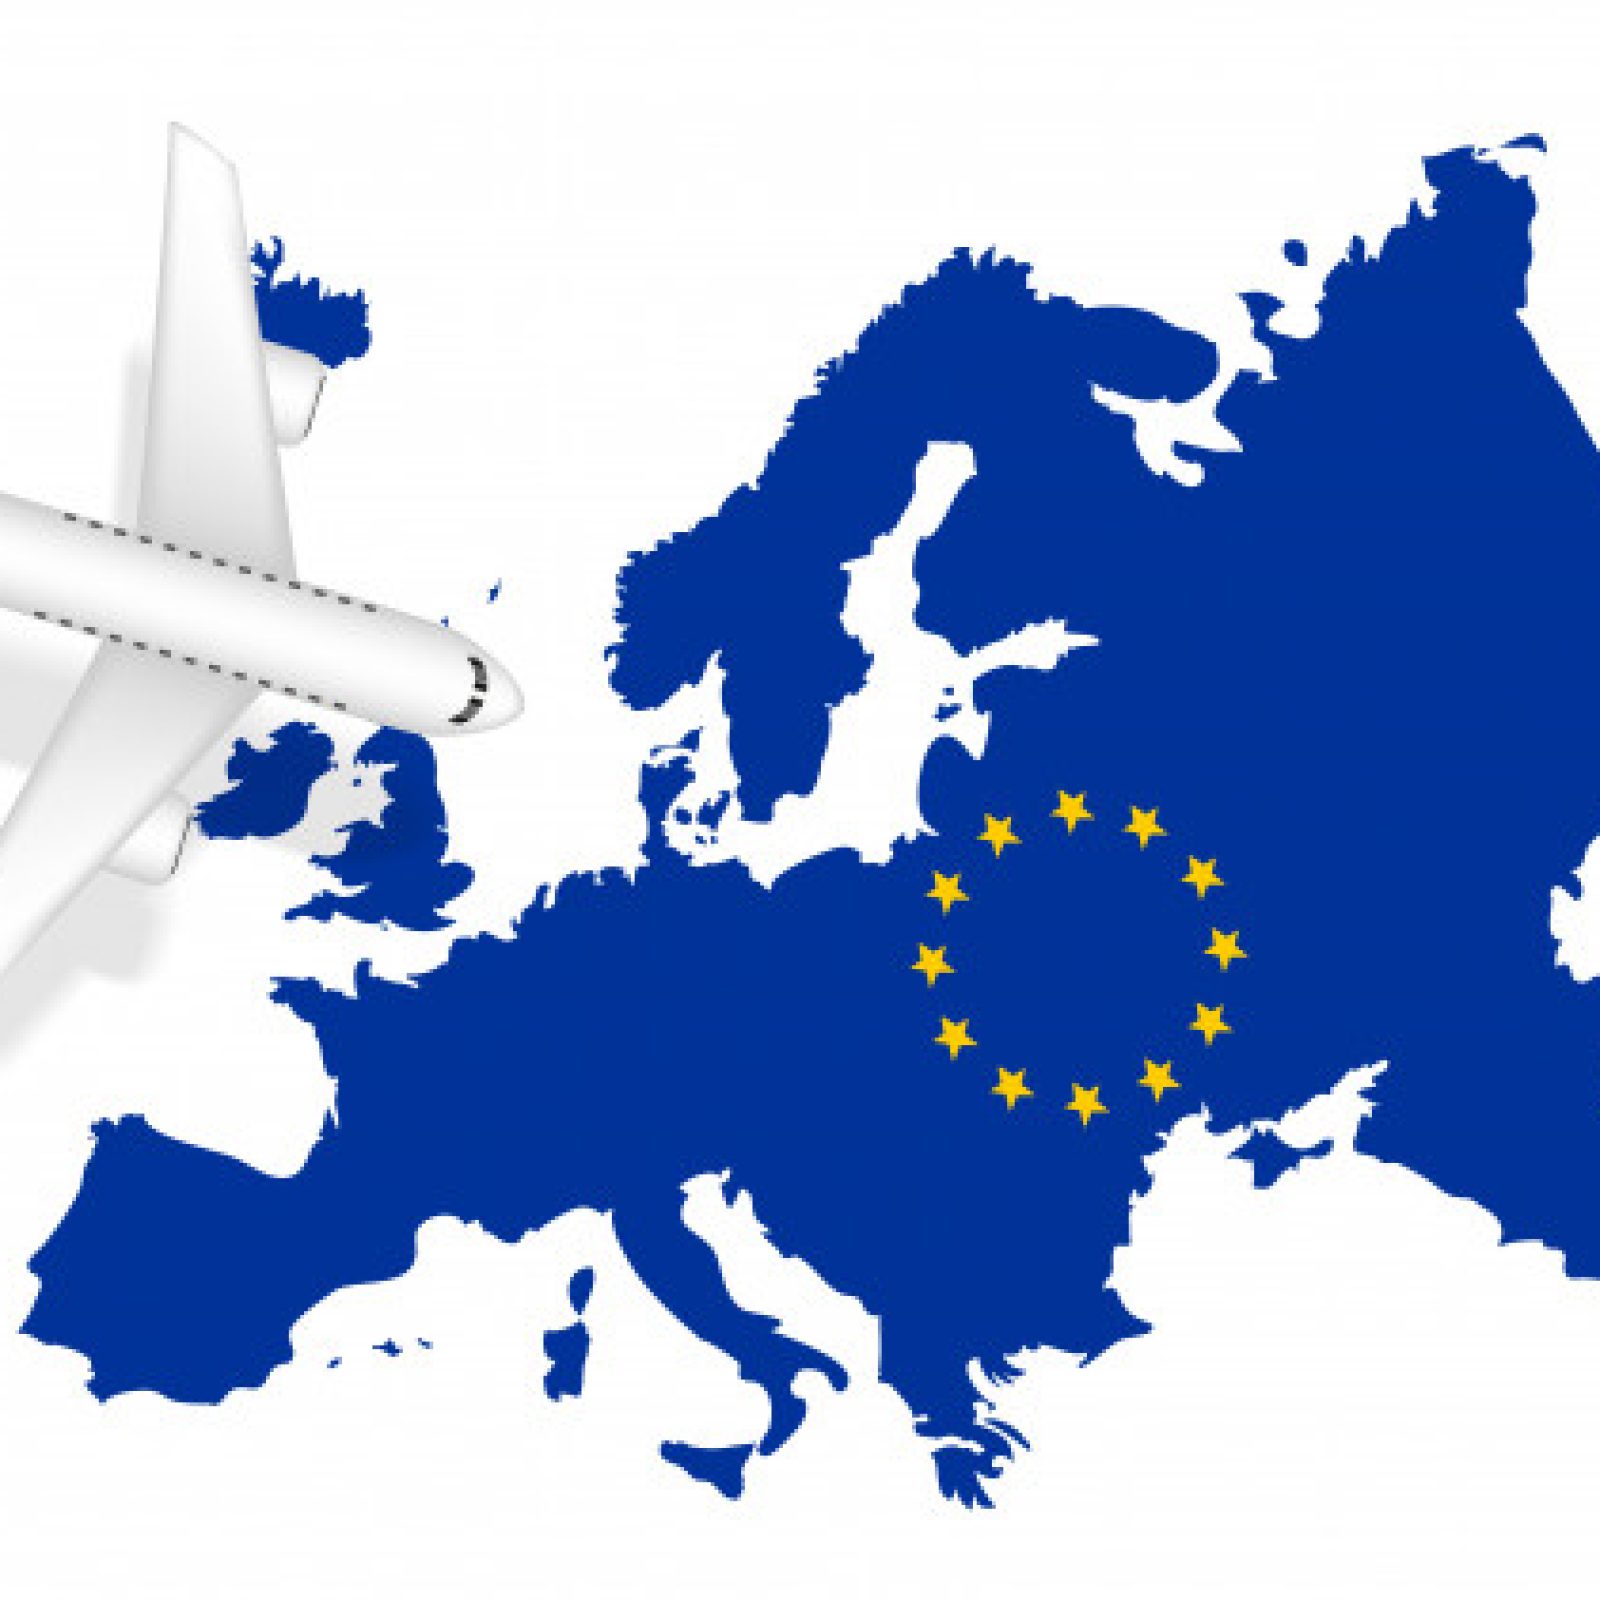 vuelo-avion-viaje-europa-mapa-europa_37787-323